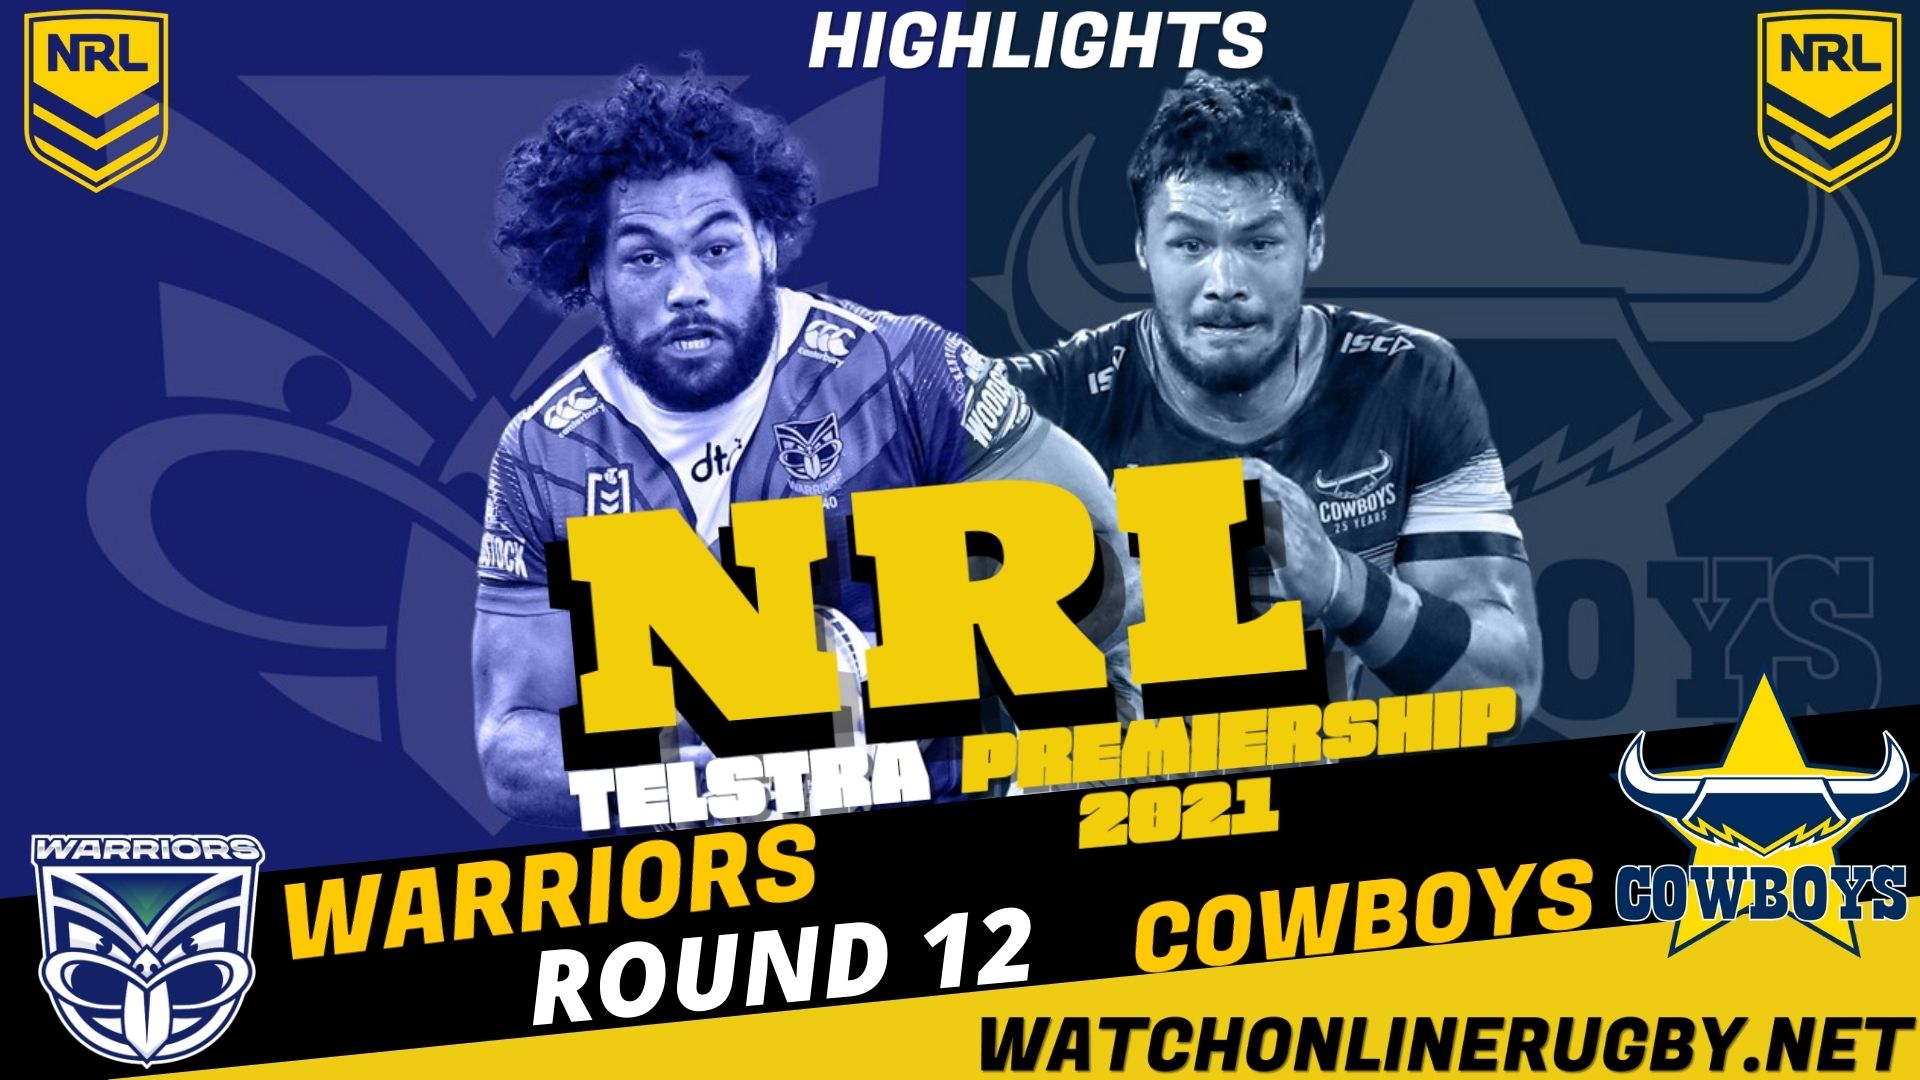 Cowboys Vs Warriors Highlights RD 12 NRL Rugby